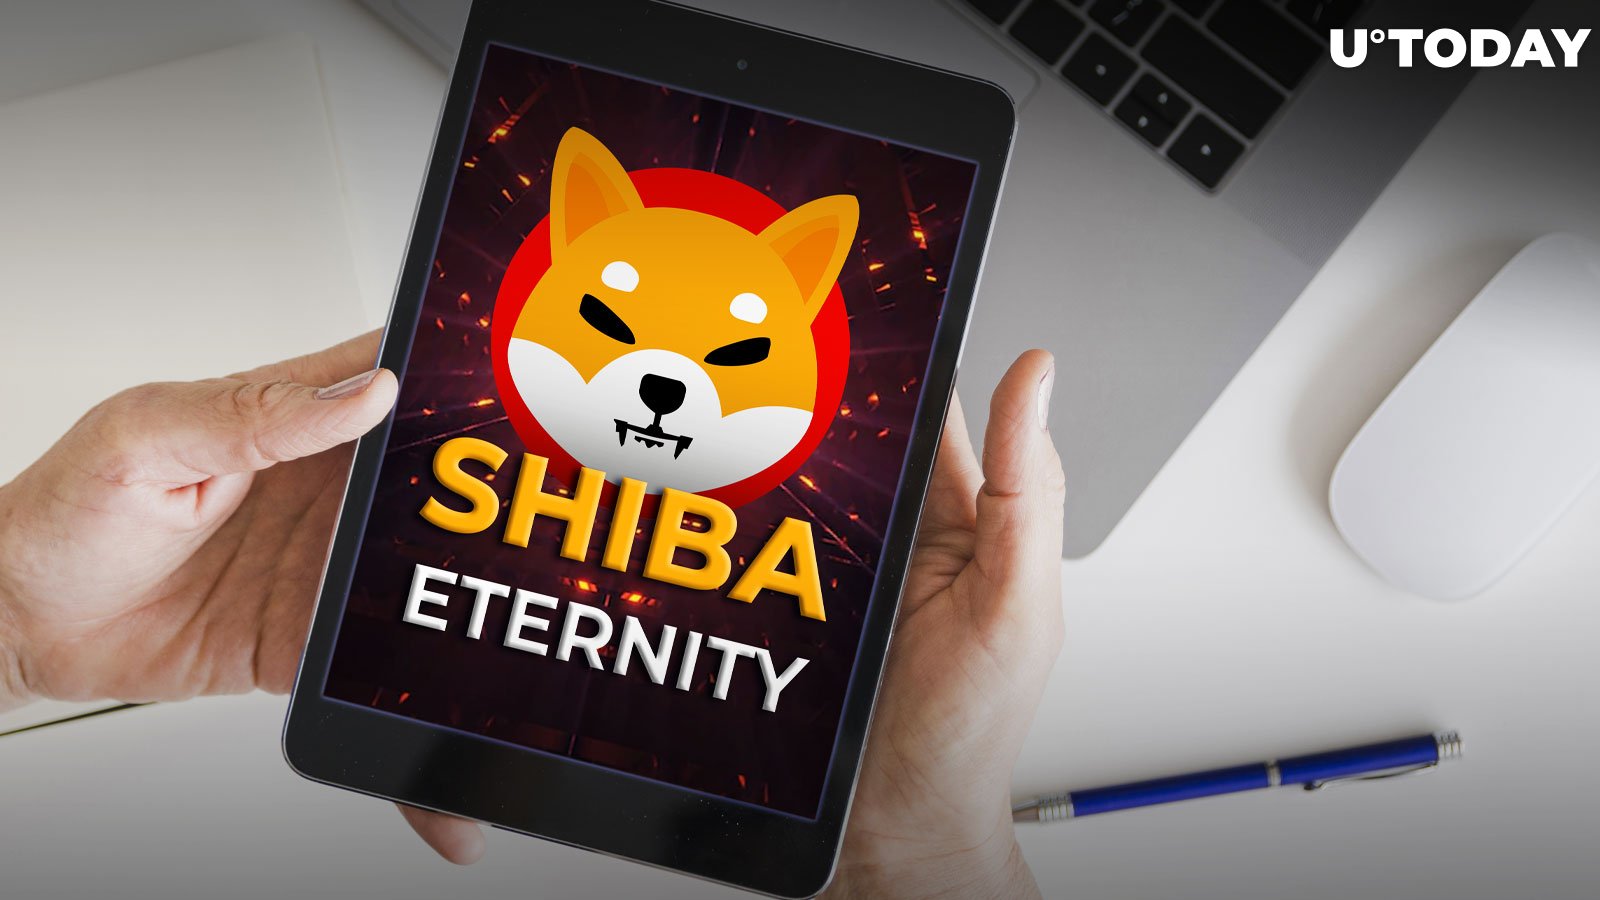 451 Million SHIB Goes to Winner of Recent Shiba Eternity Contest